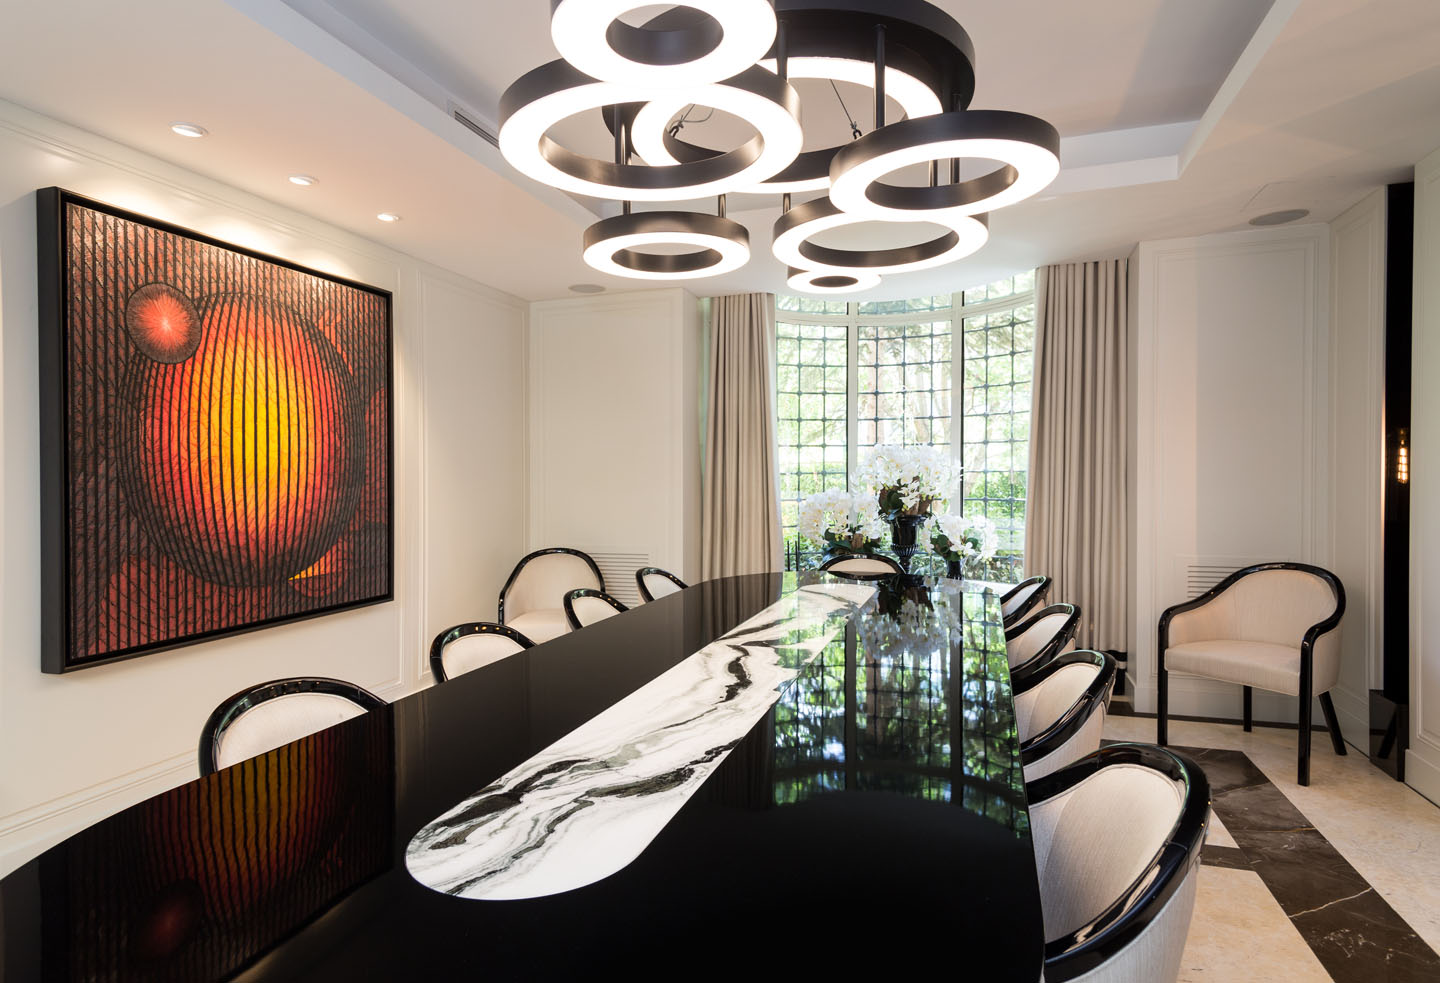 Bretz UK - Luxury Interior Design Service | Home Design, Interior Design & Renovation Services